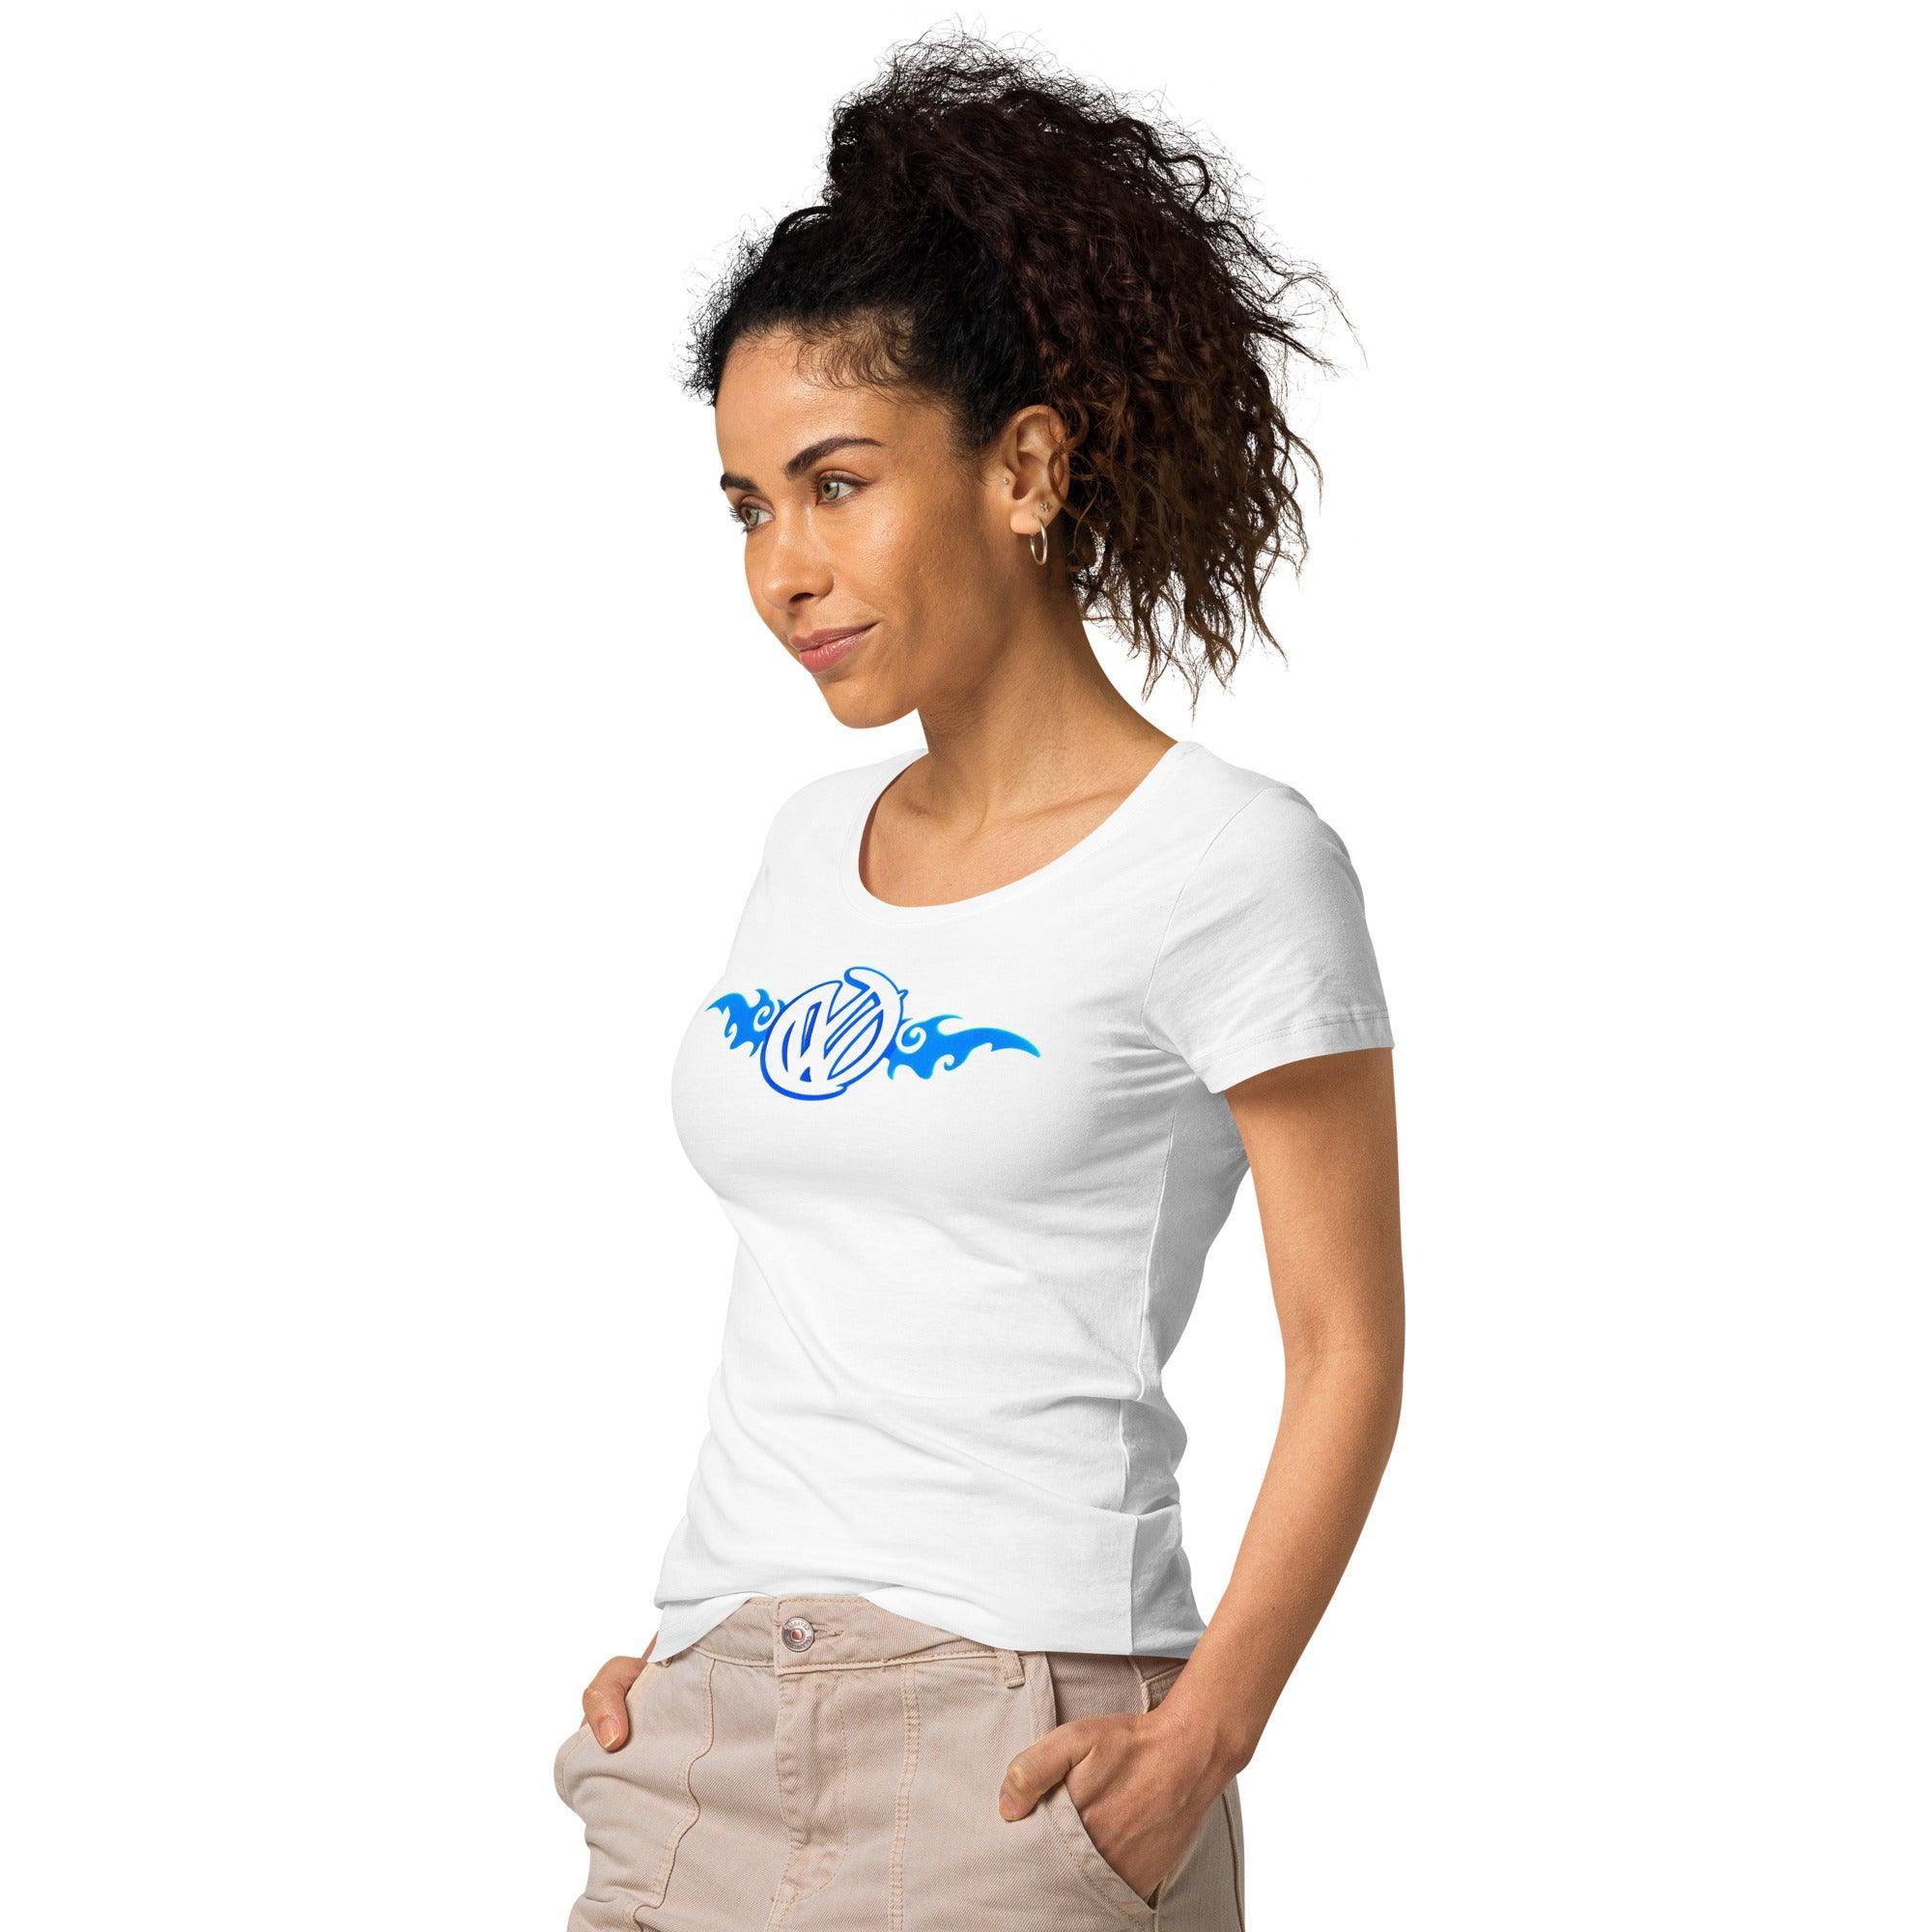 Camiseta orgánica básica para mujer VW AT - AutoRR 9495867_14501